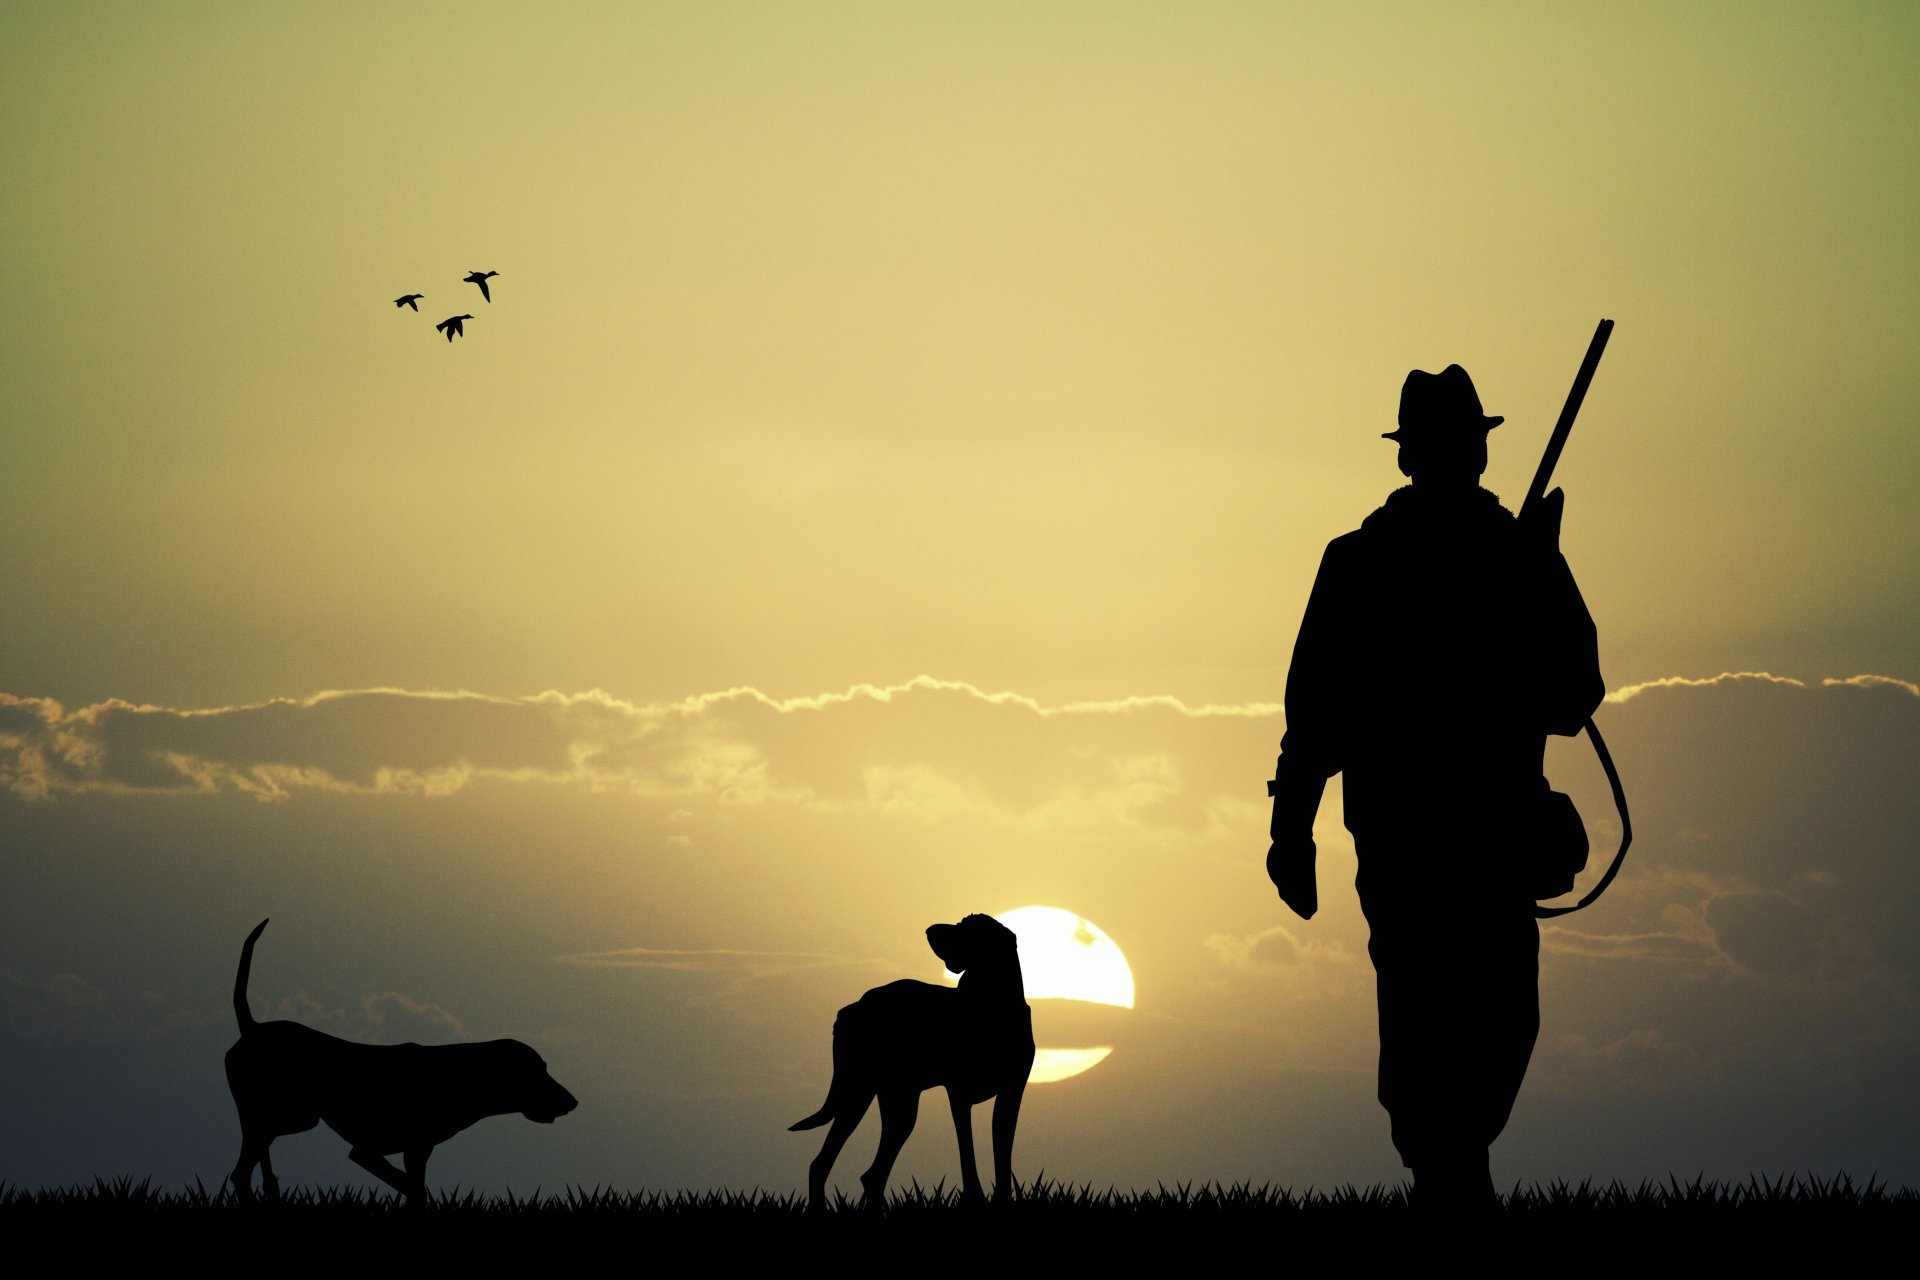 Silhouette hunt rifle the gun rifle hunter two dogs plain sunset